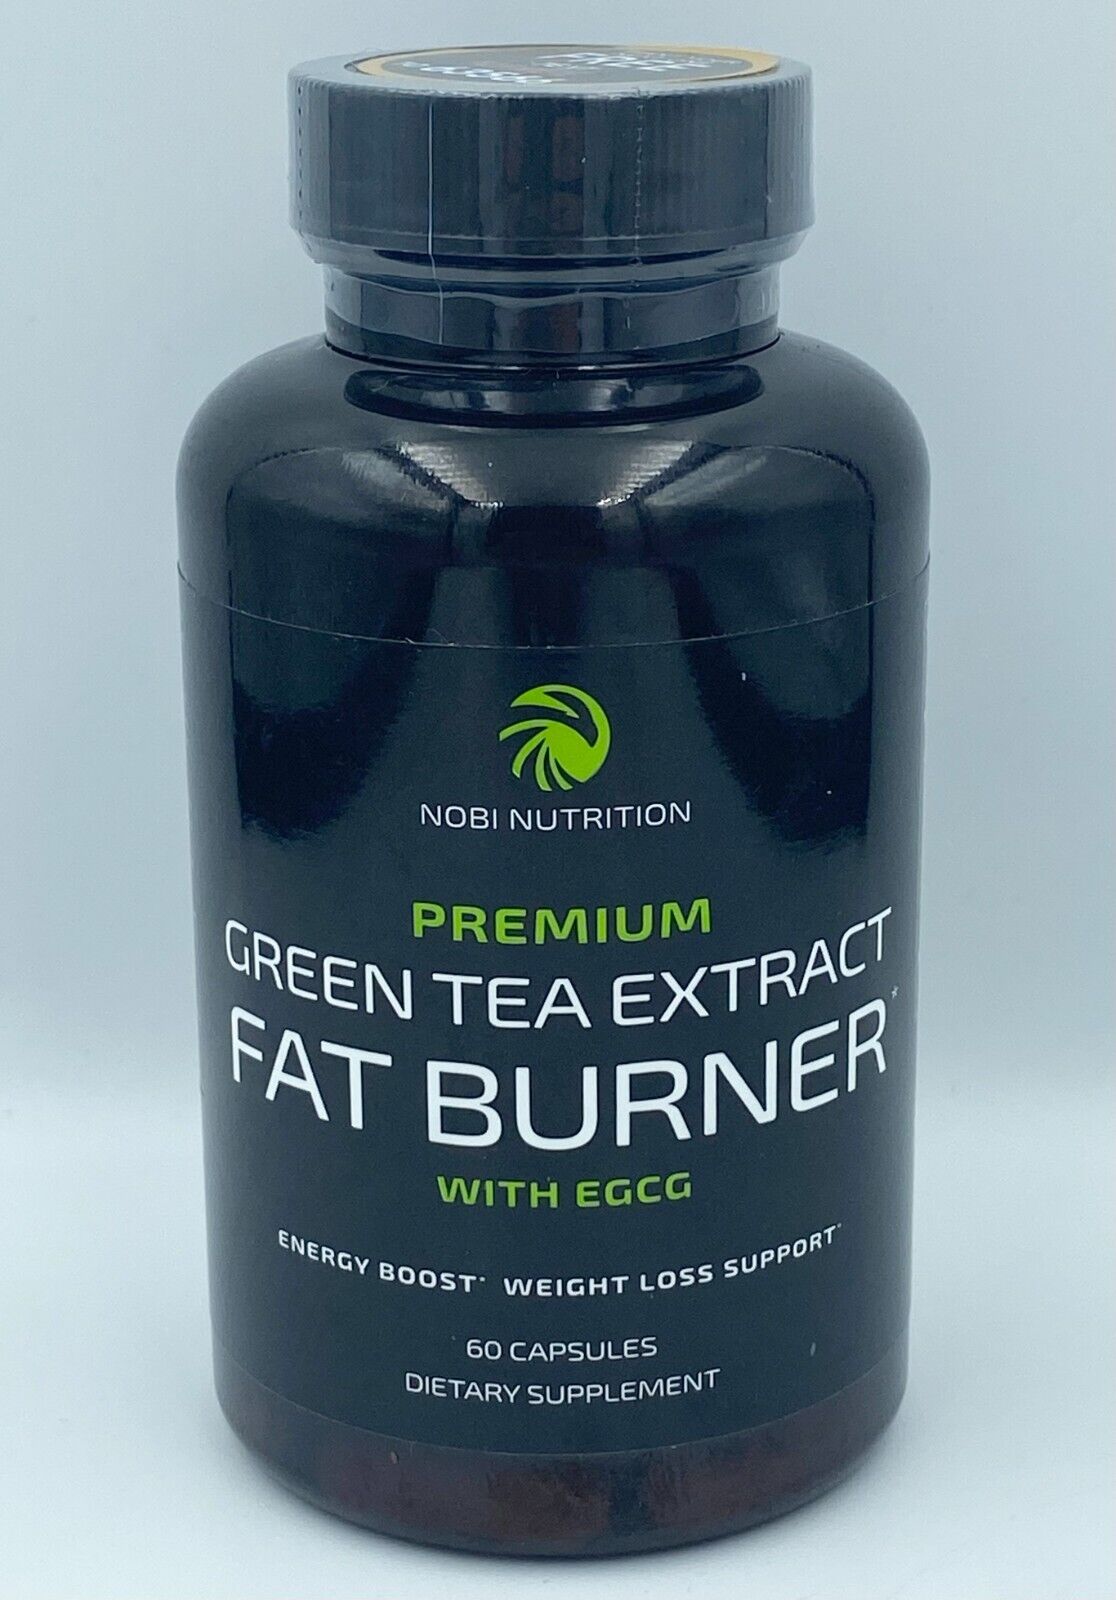 Nobi Nutrition Green Tea Fat Burner 60 Capsules Dietary Supplement W/ Egcg 7/22